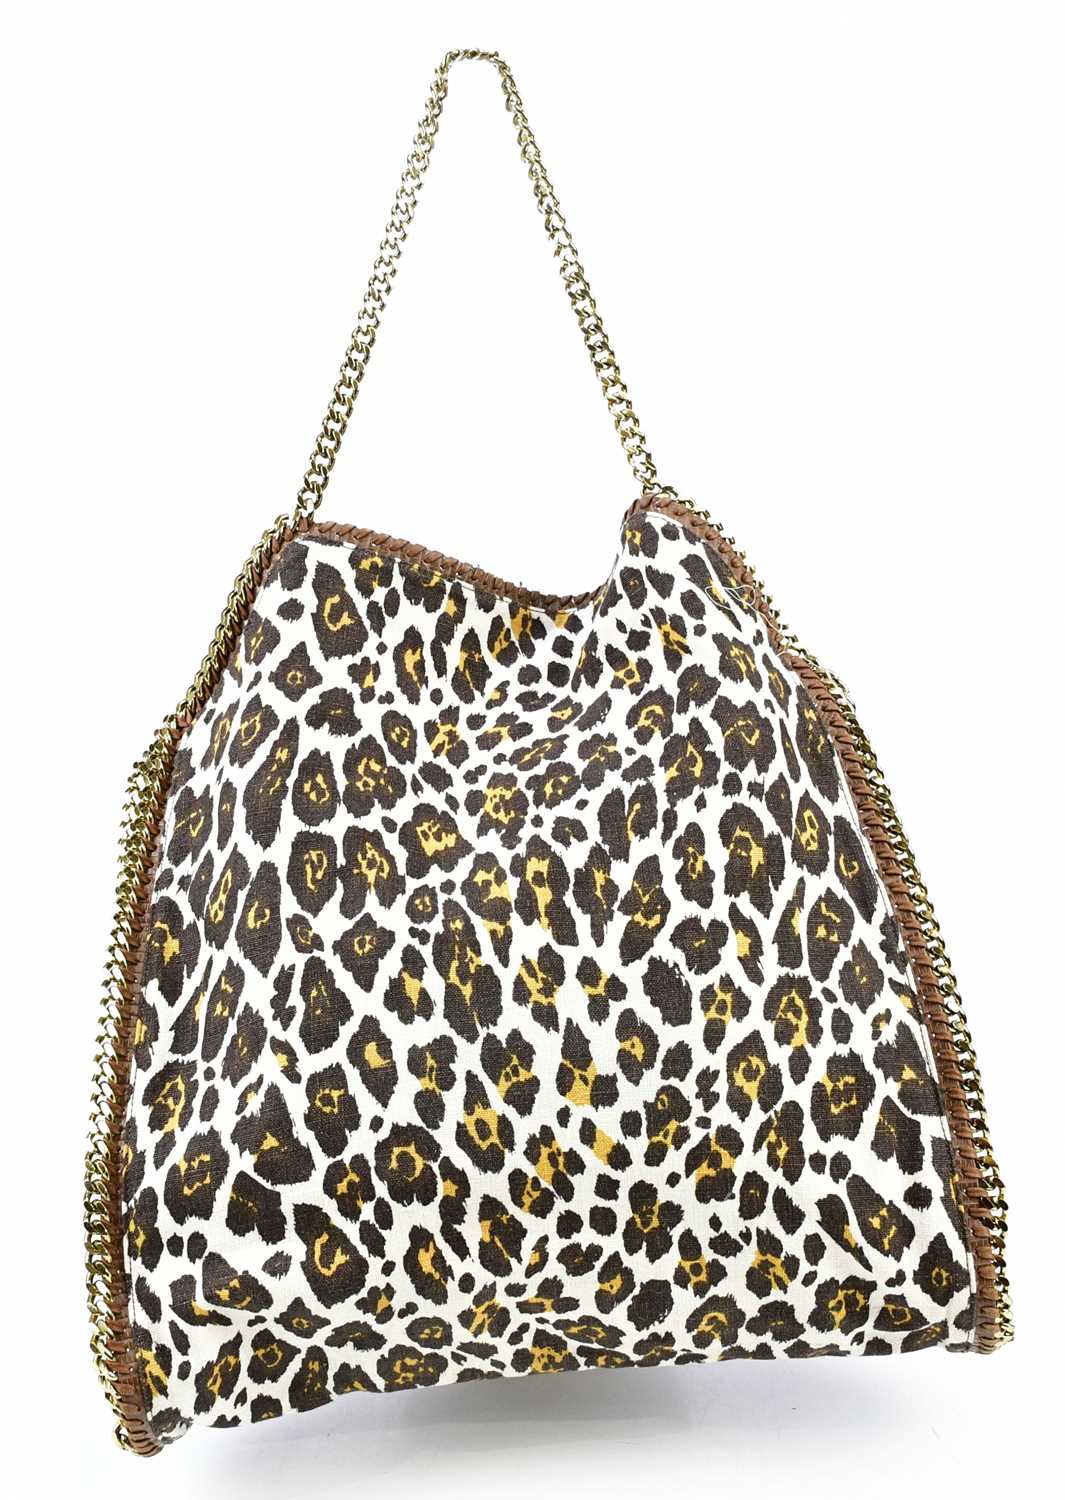 STELLA MCCARTNEY; a Falabella foldover leopard canvas handbag with signature heavy gold tone curb